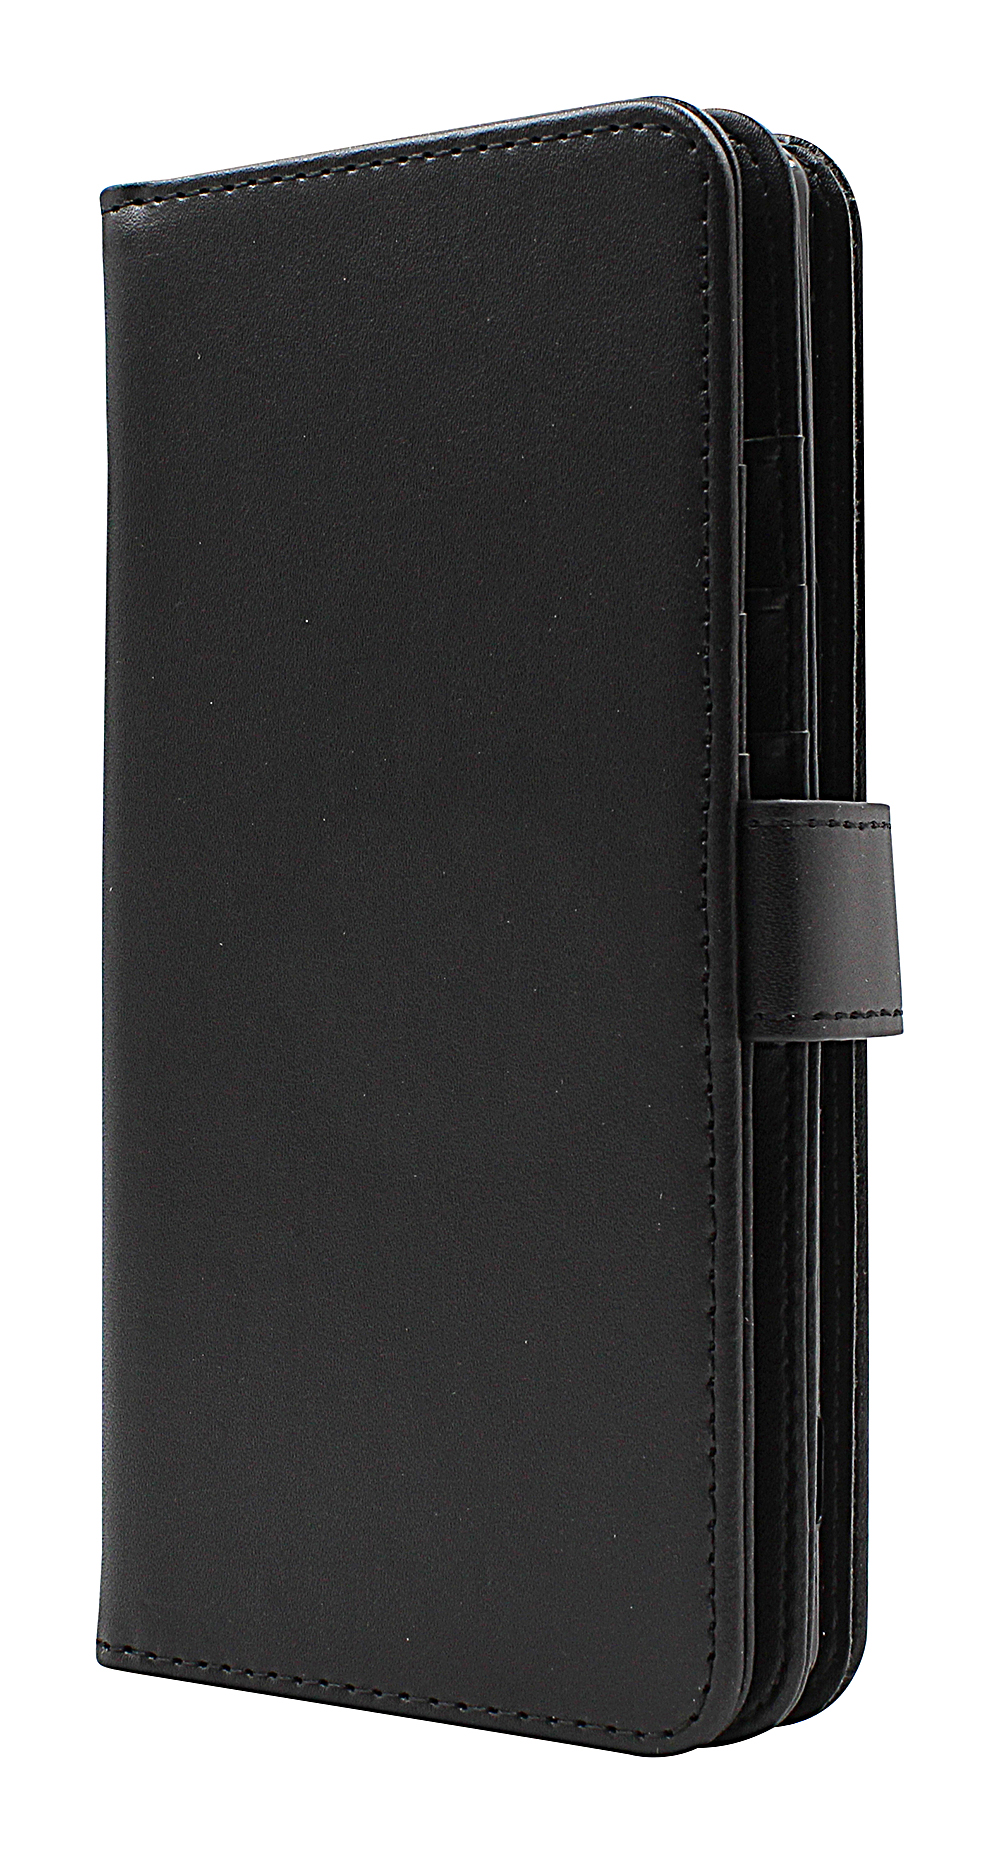 CoverIn Skimblocker XL Wallet Sony Xperia 5 (J9210)